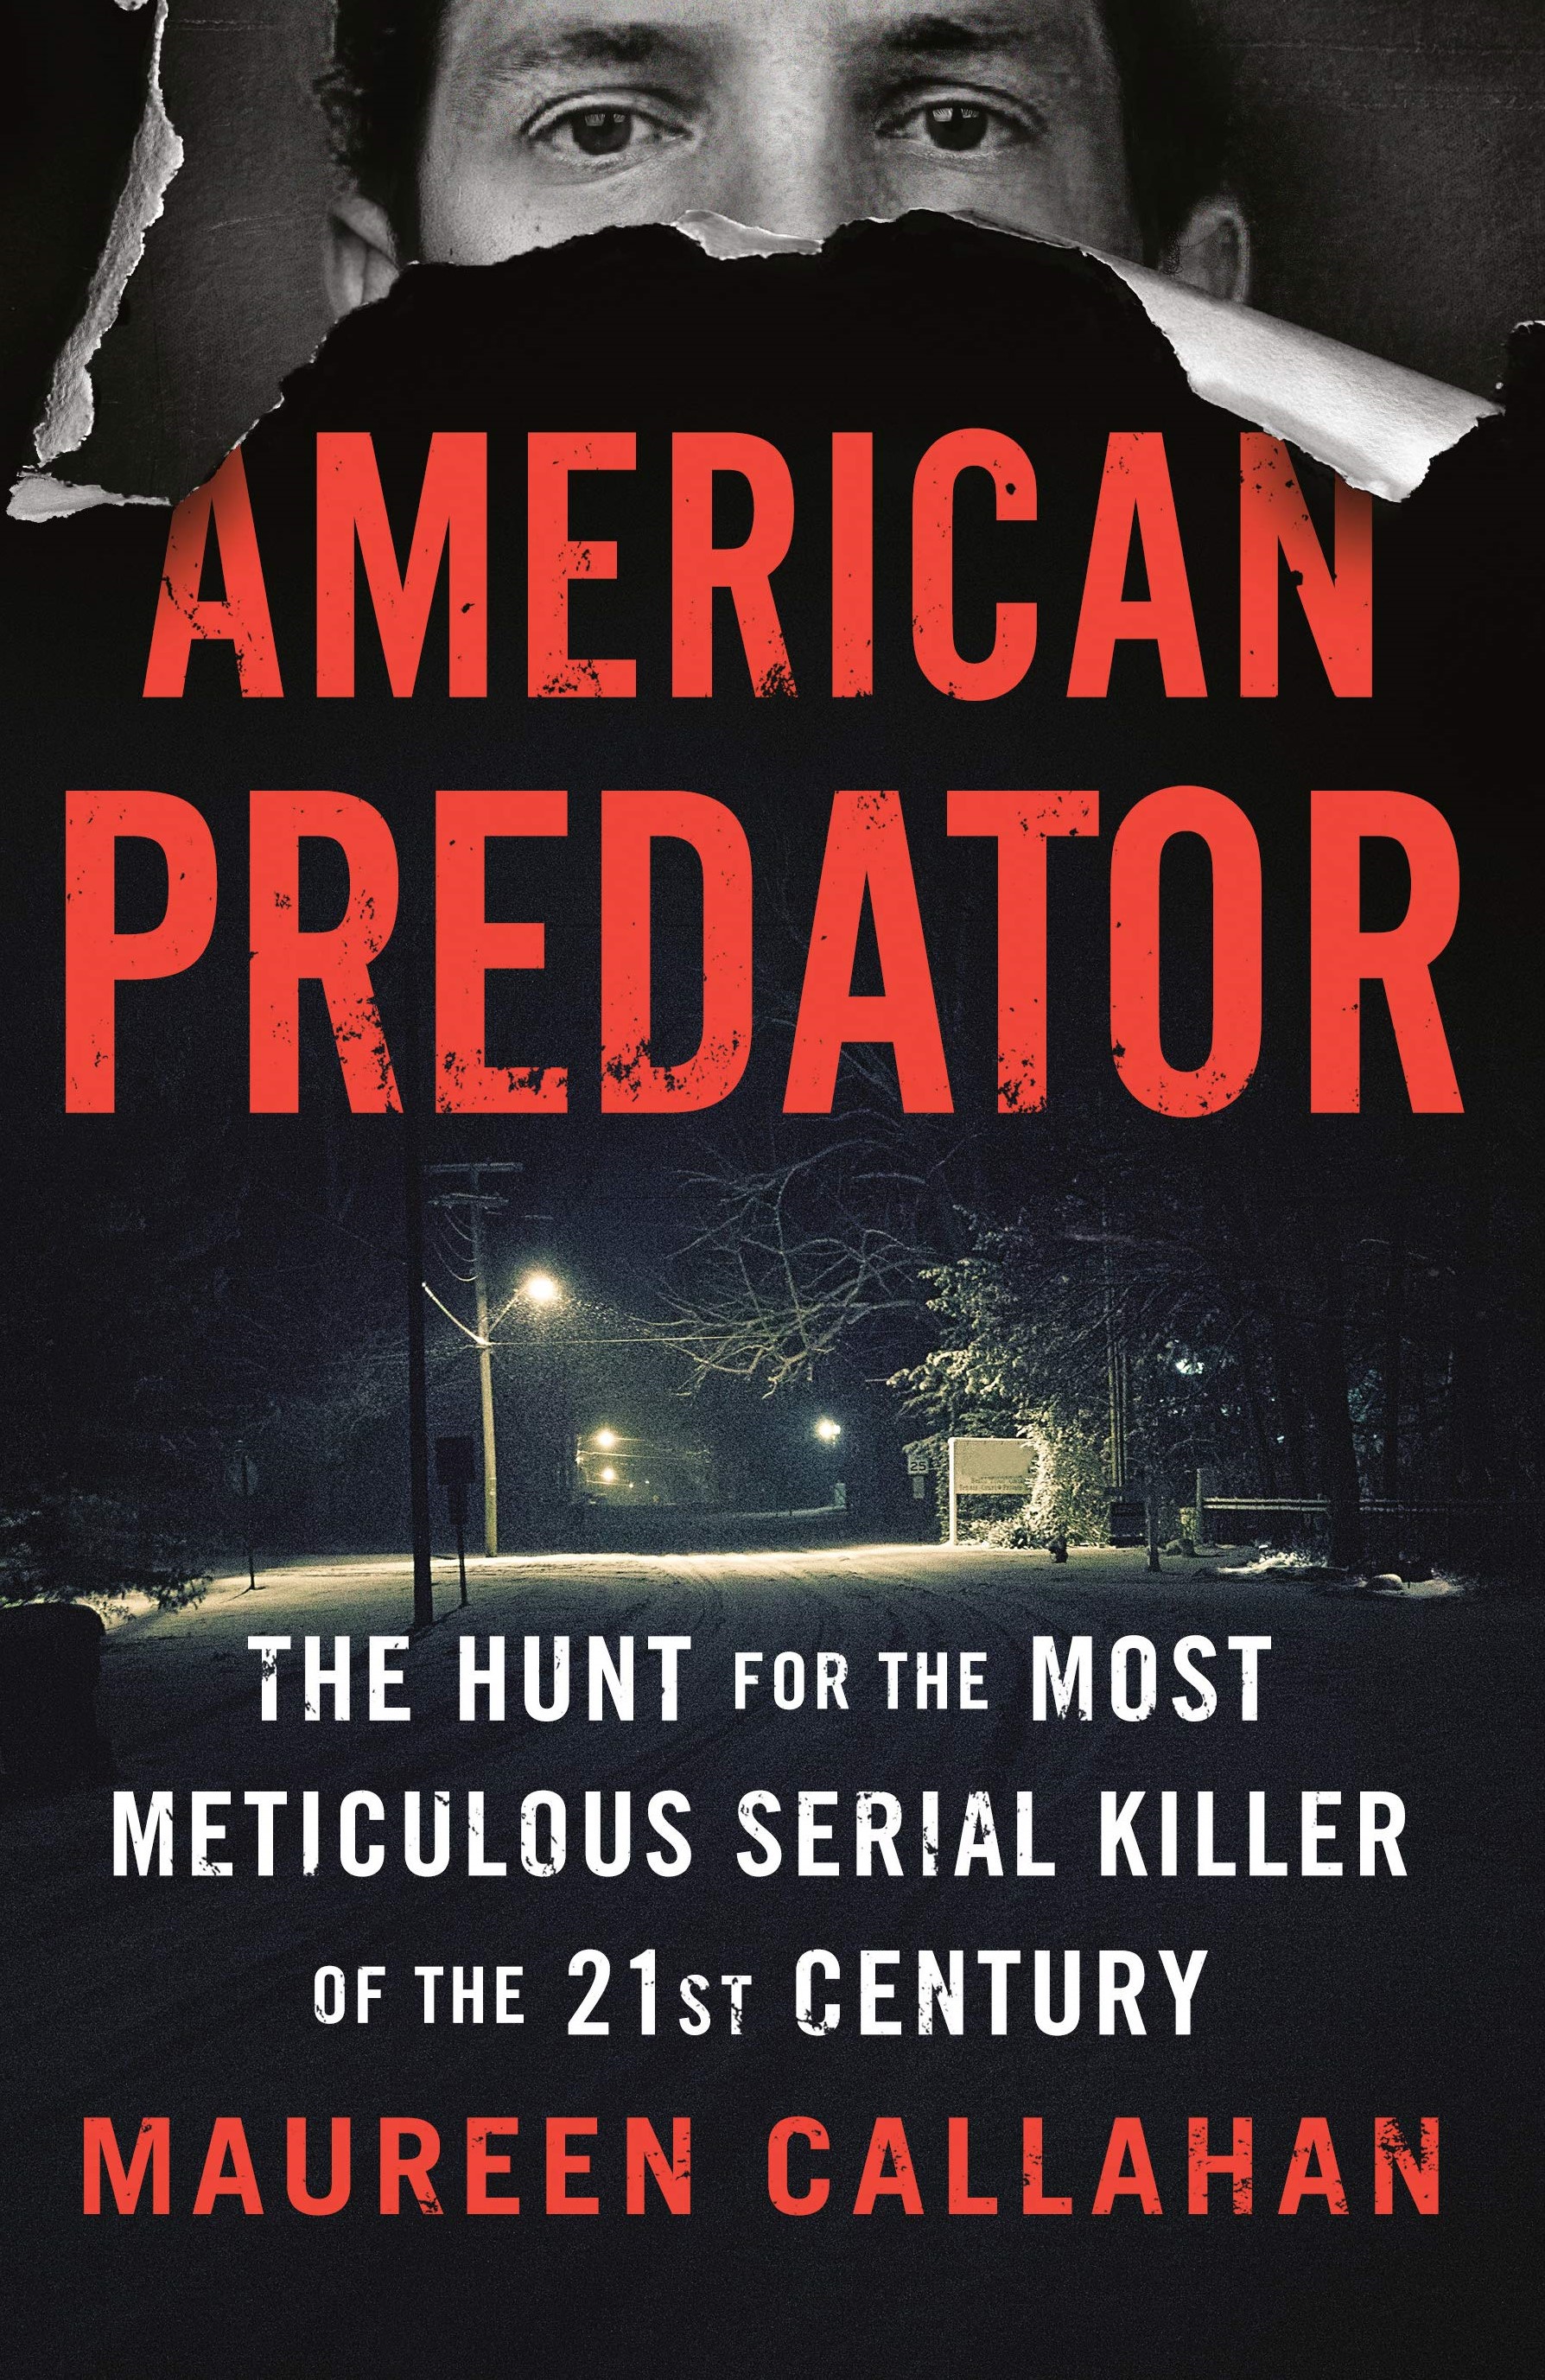 'American Predator' by Maureen Callahan